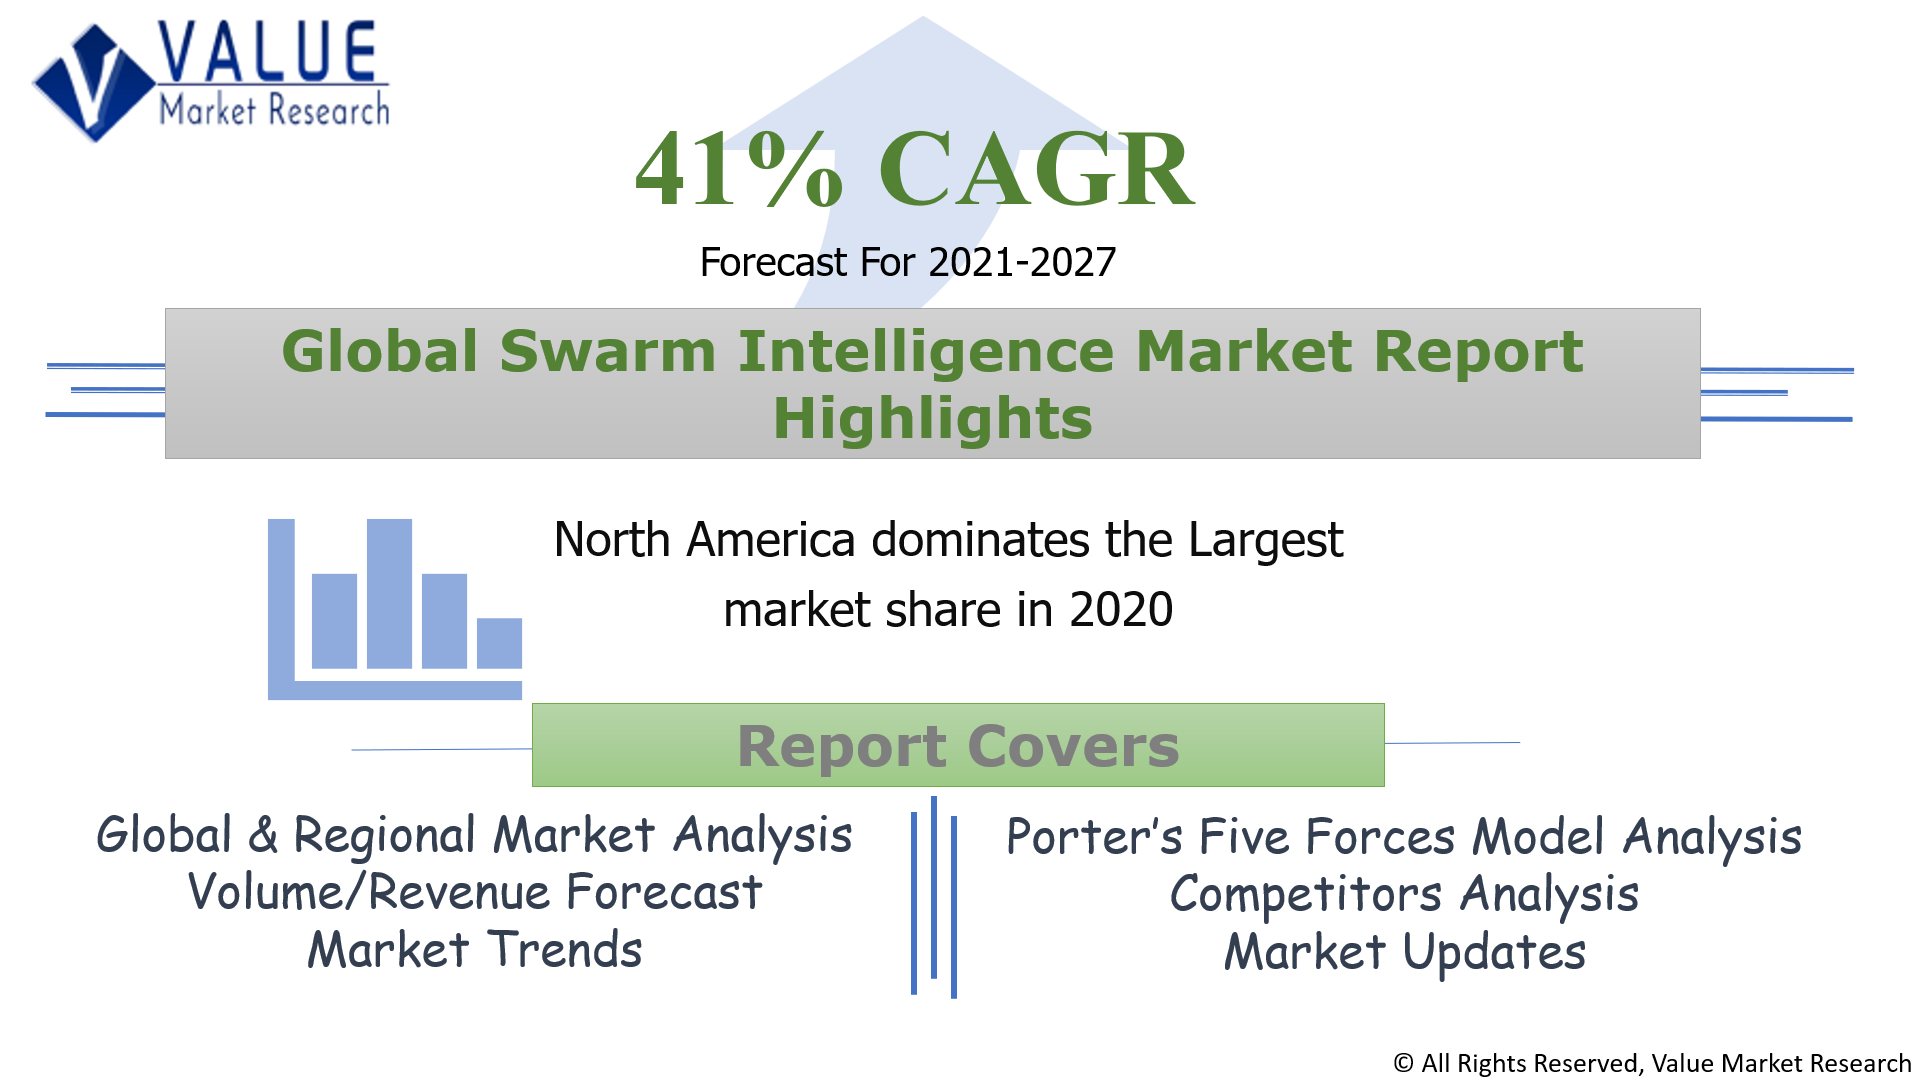 Global Swarm Intelligence Market Share